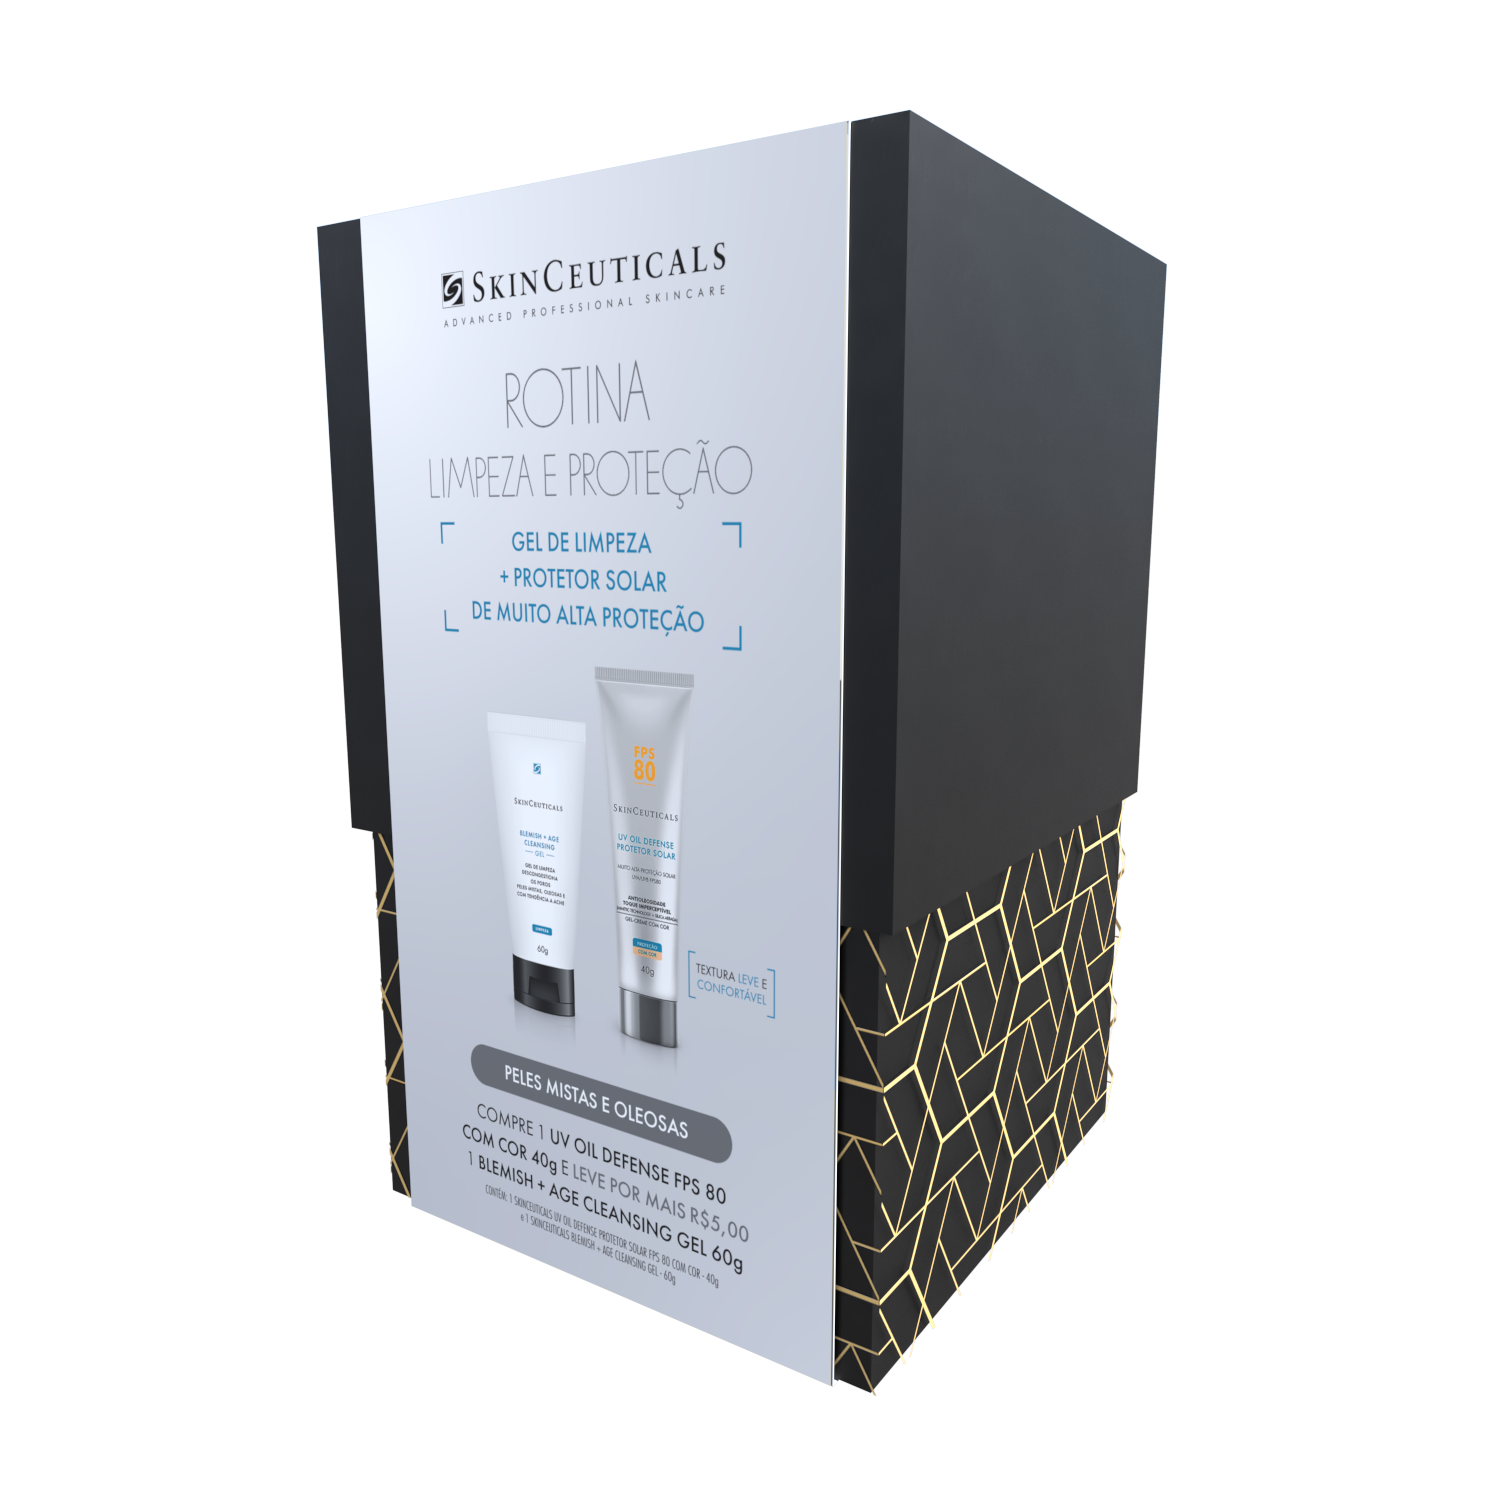 Kit SkinCeuticals Protetor Solar Facial UV Oil Defense FPS 80 Com Cor 40g + Gel de Limpeza Blemish + Age Cleansing 60g